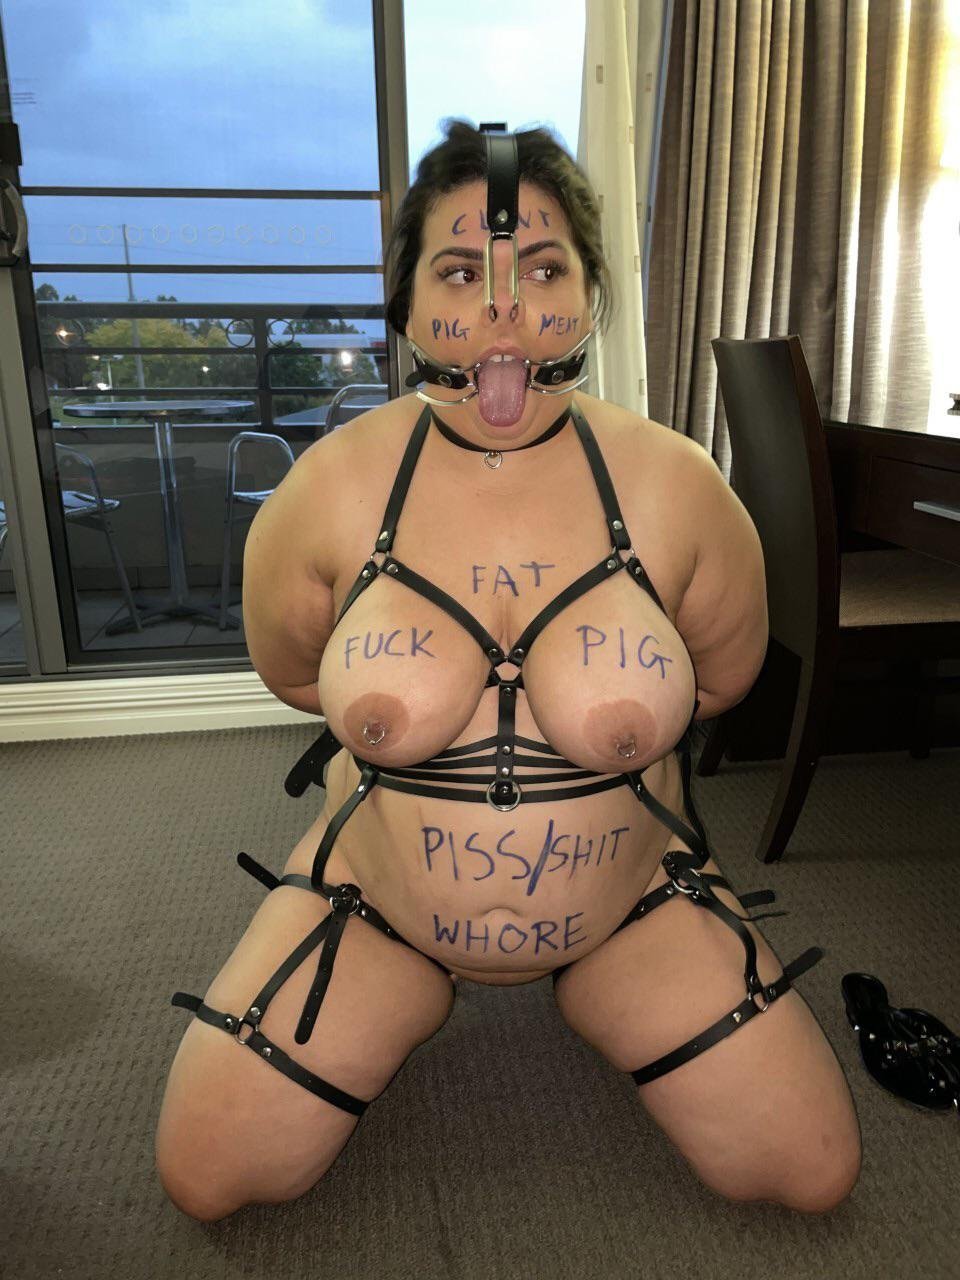 Humiliation Porn - Perfect humiliation Pig - Porn Videos & Photos - EroMe